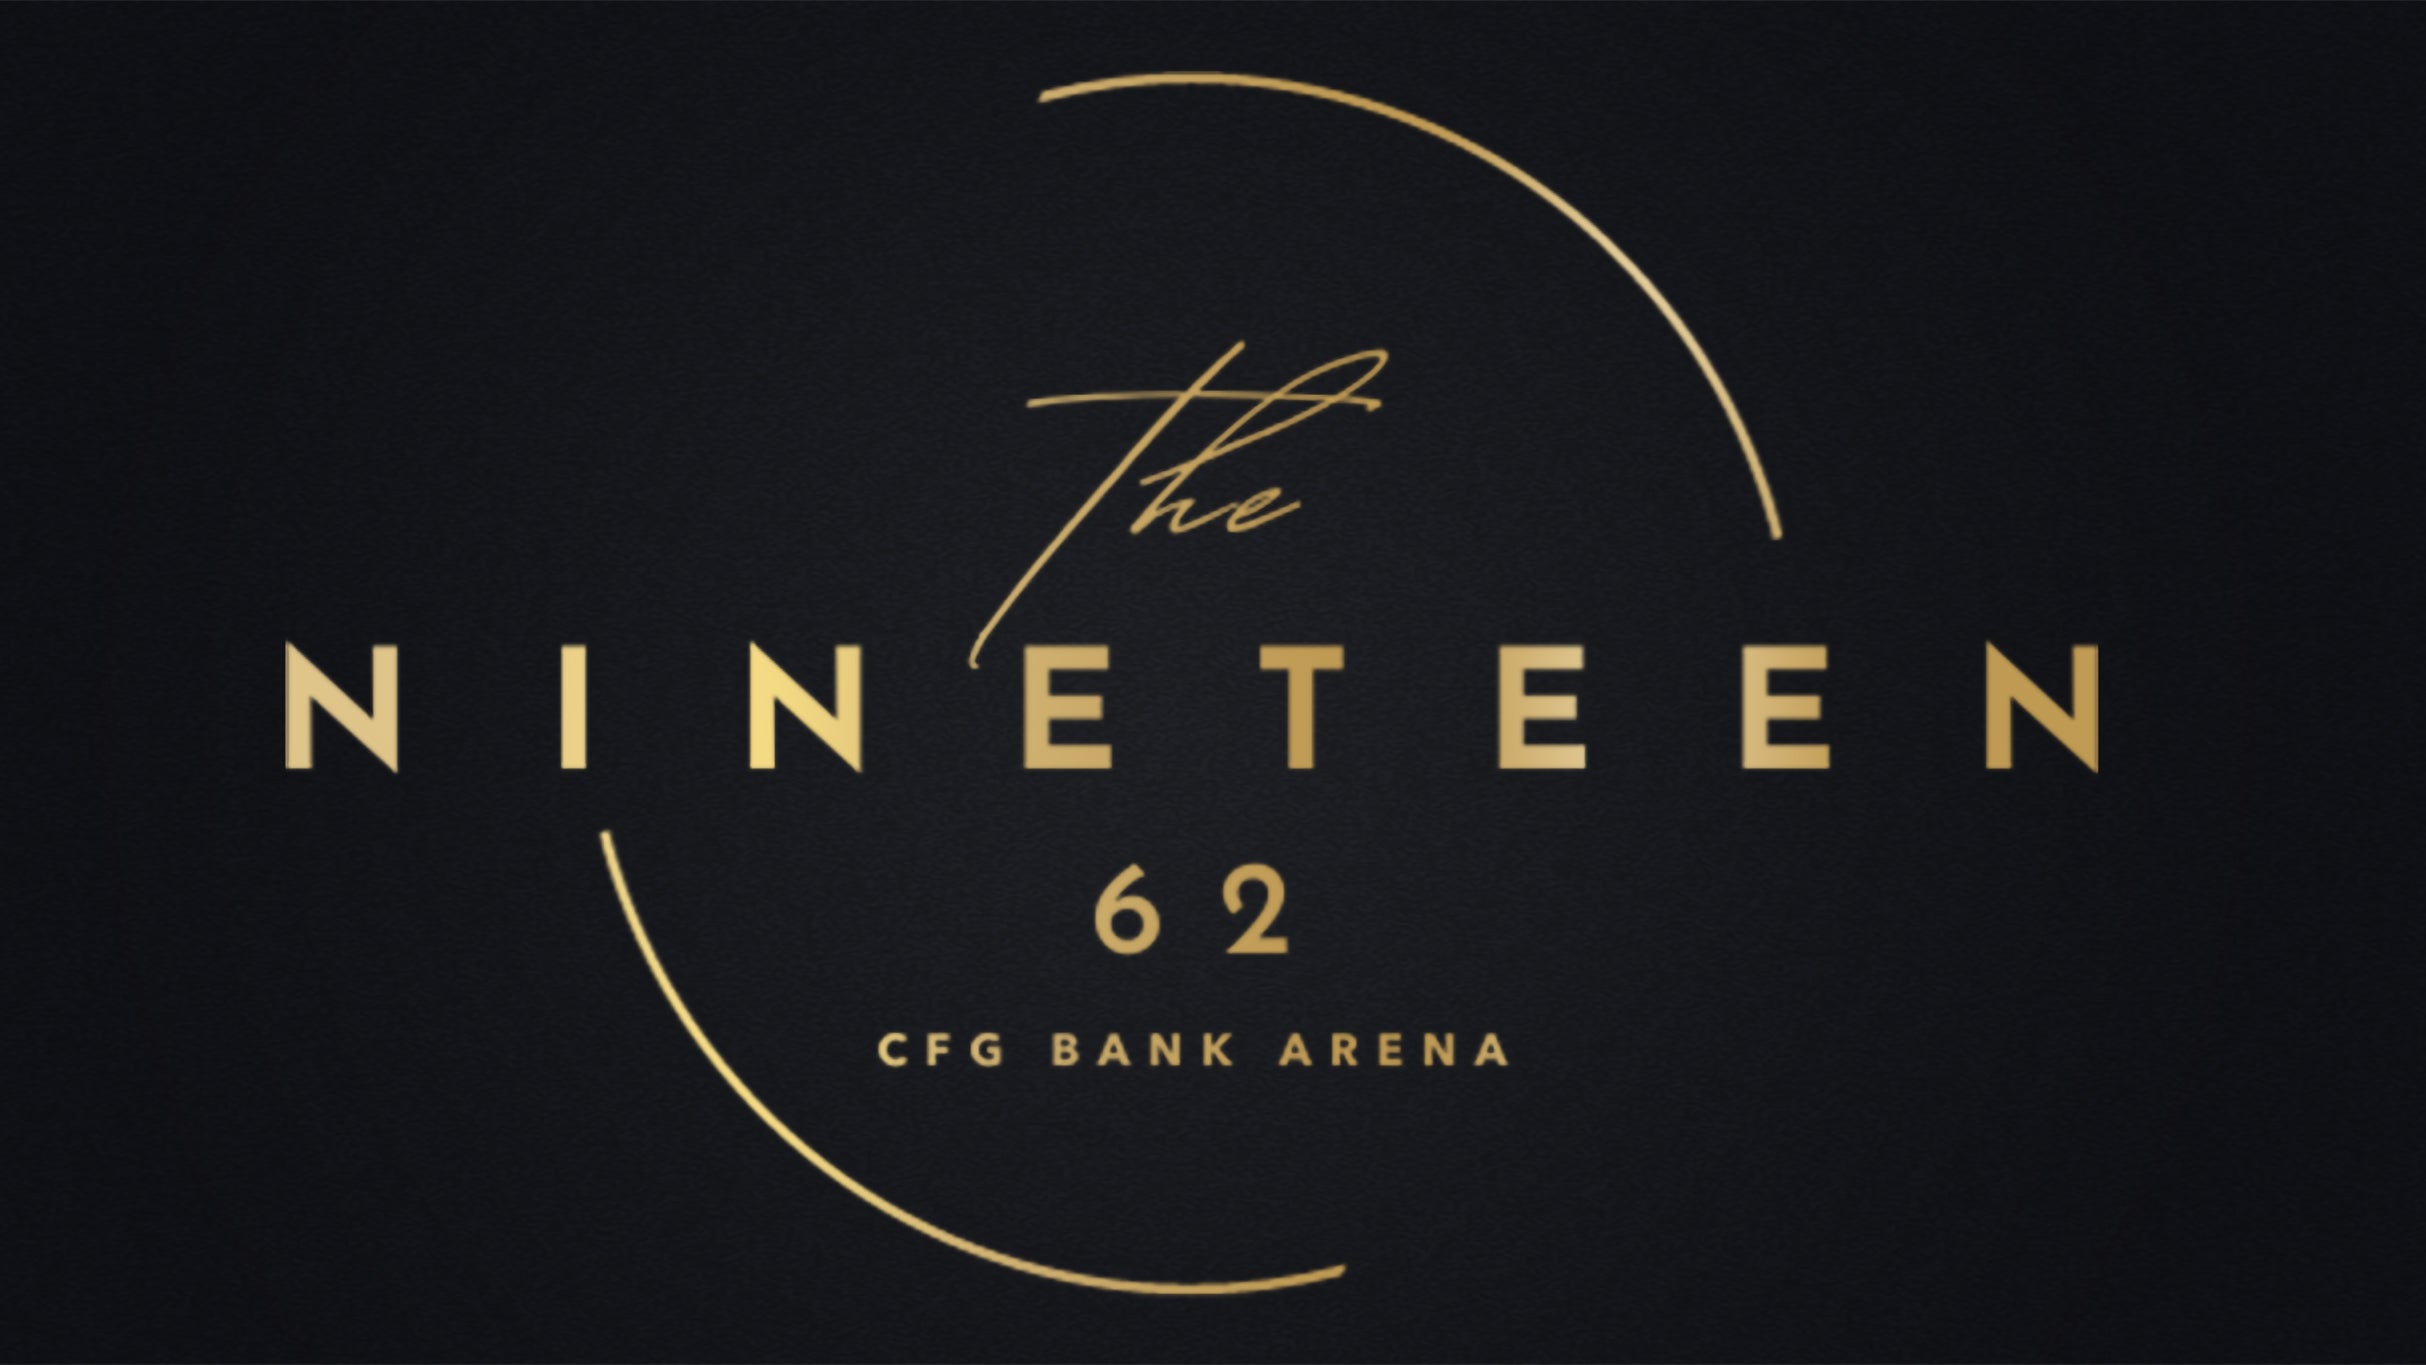 The Nineteen 62 At CFG Bank Arena - Justin Timberlake presale information on freepresalepasswords.com